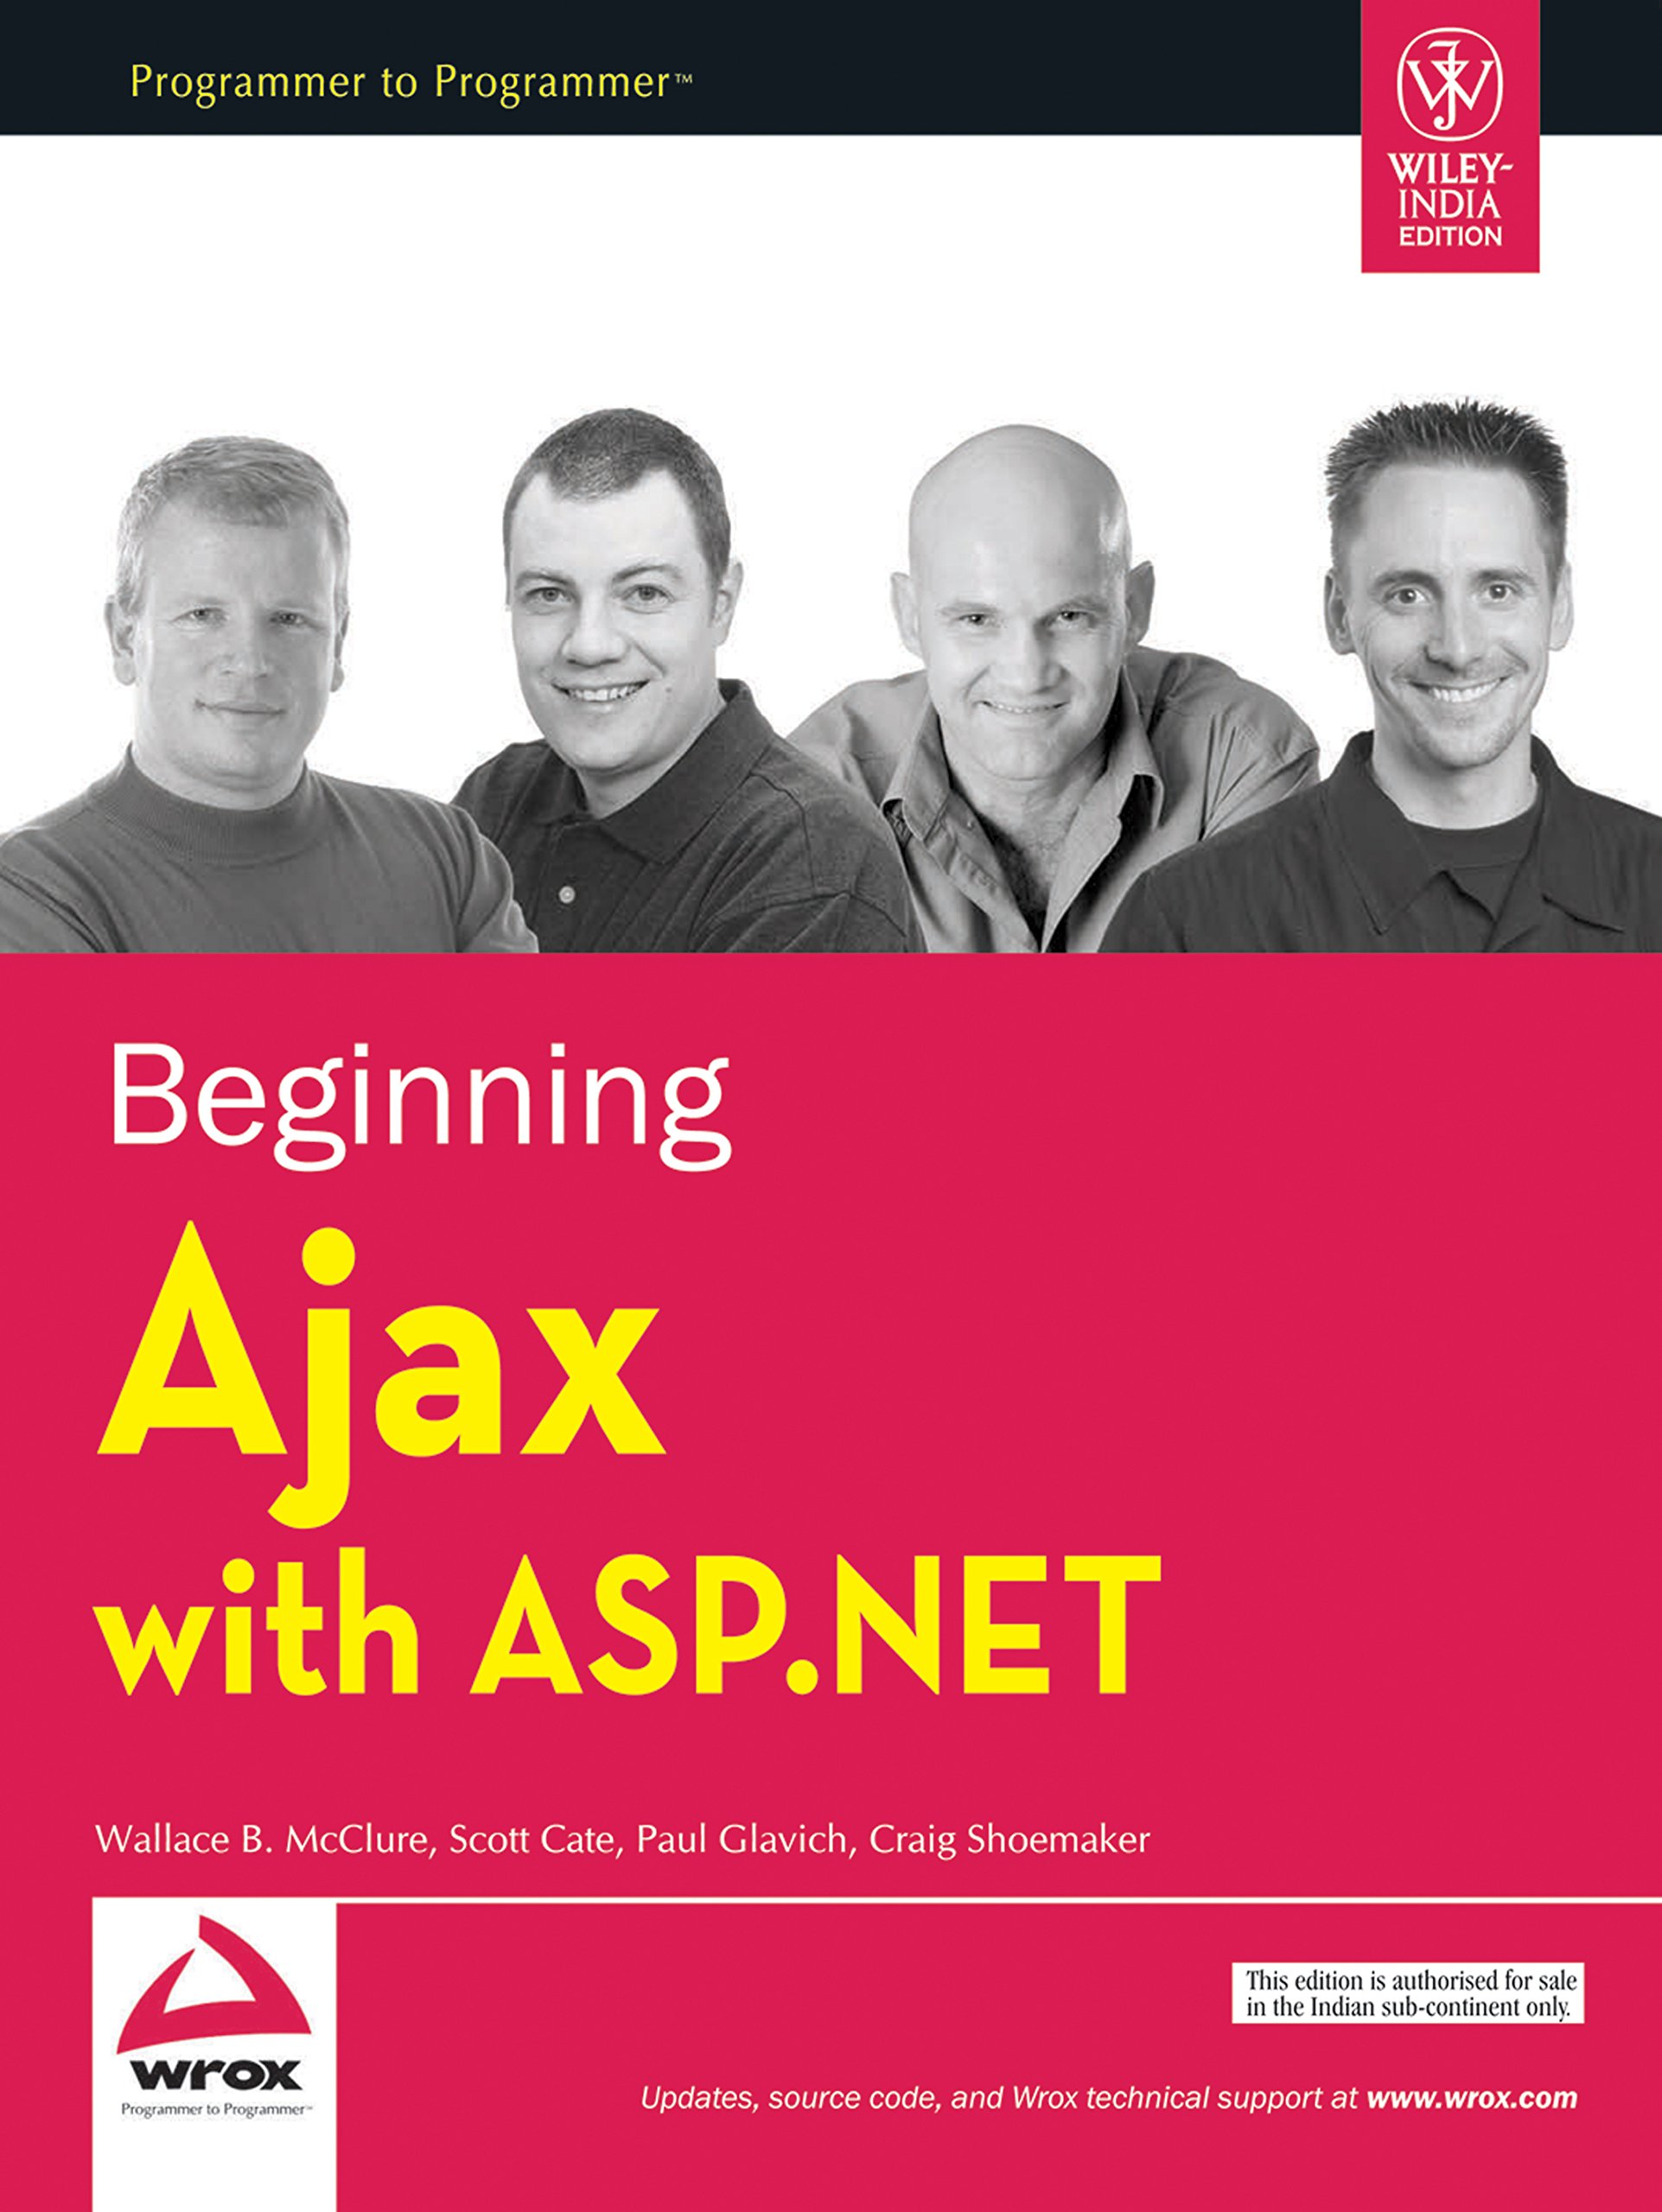 Beginning Ajax with ASP.NET by Wallace B. McClure, Scott Cate, Paul Glavich, Craig Shoemaker